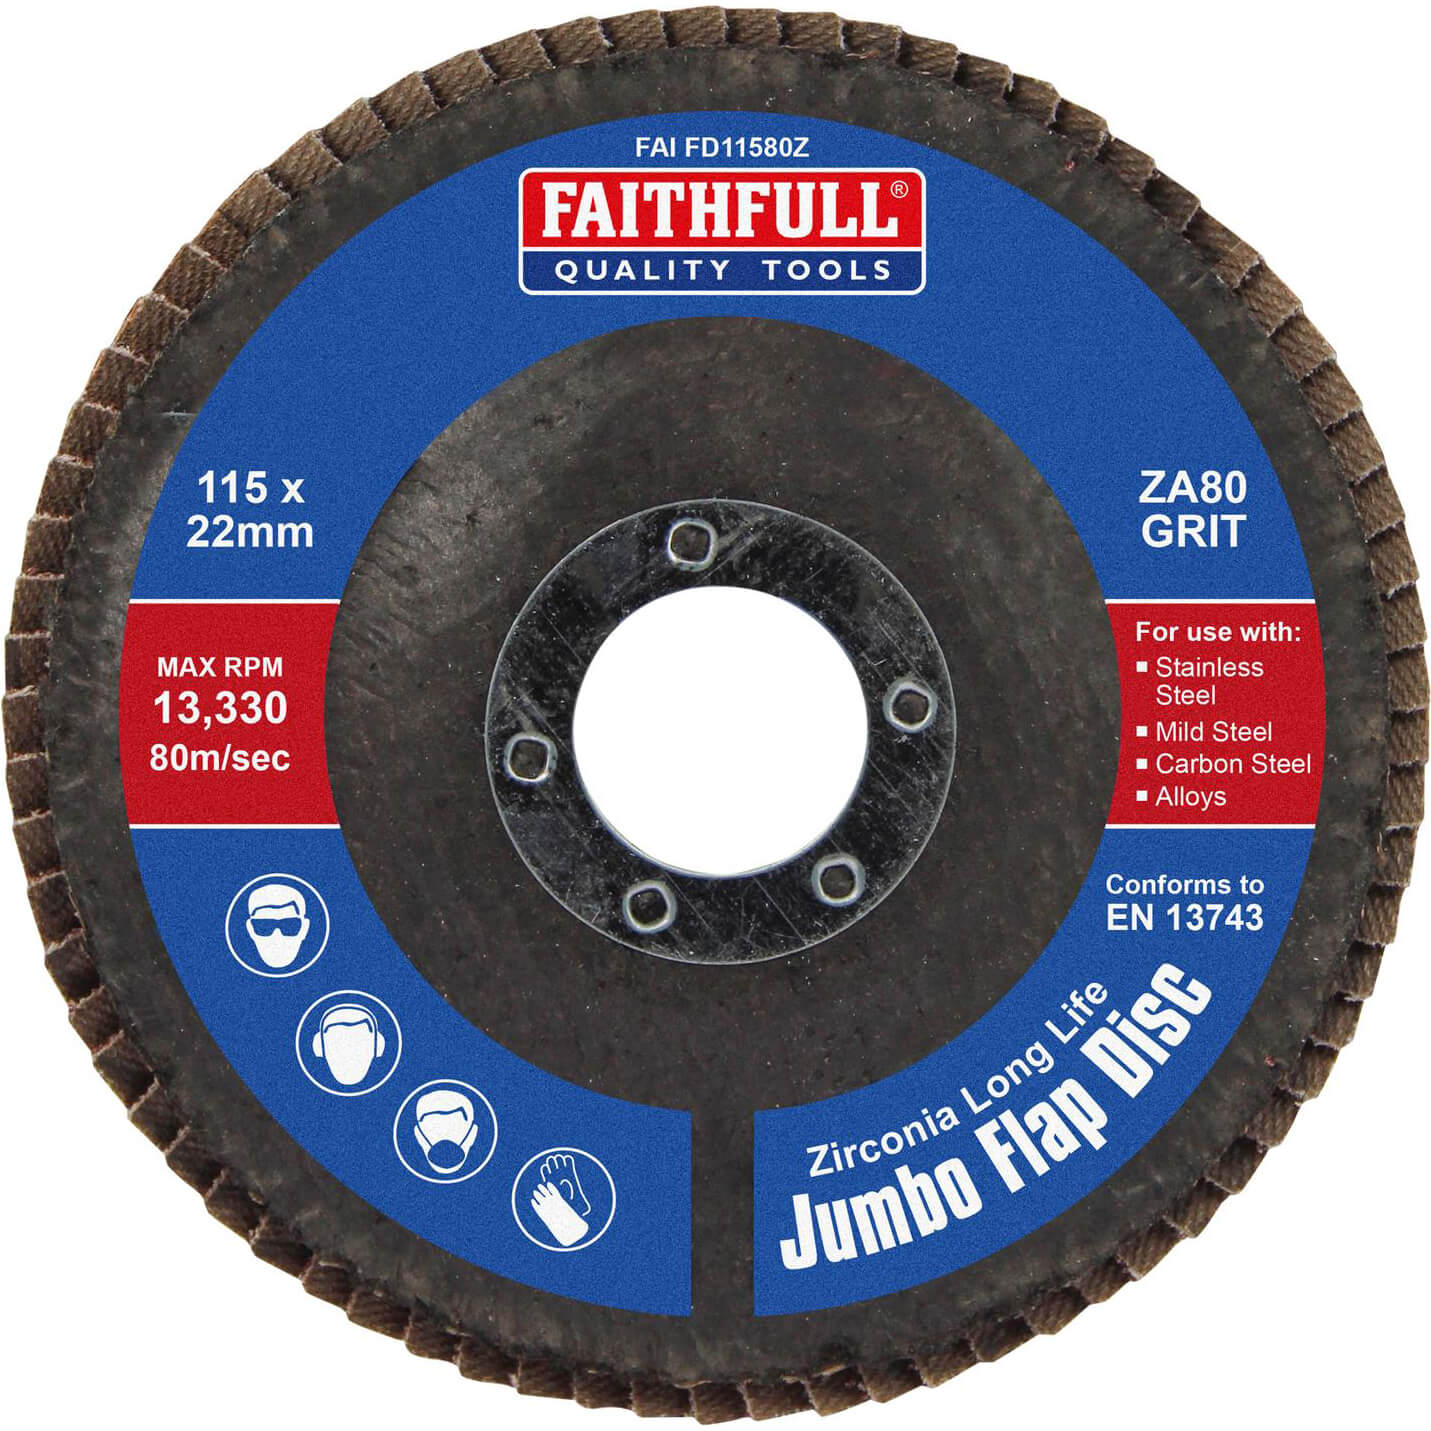 Photos - Cutting Disc Faithfull Zirconia Abrasive Jumbo Flap Disc 115mm 80g Pack of 1 FAIFD11580 